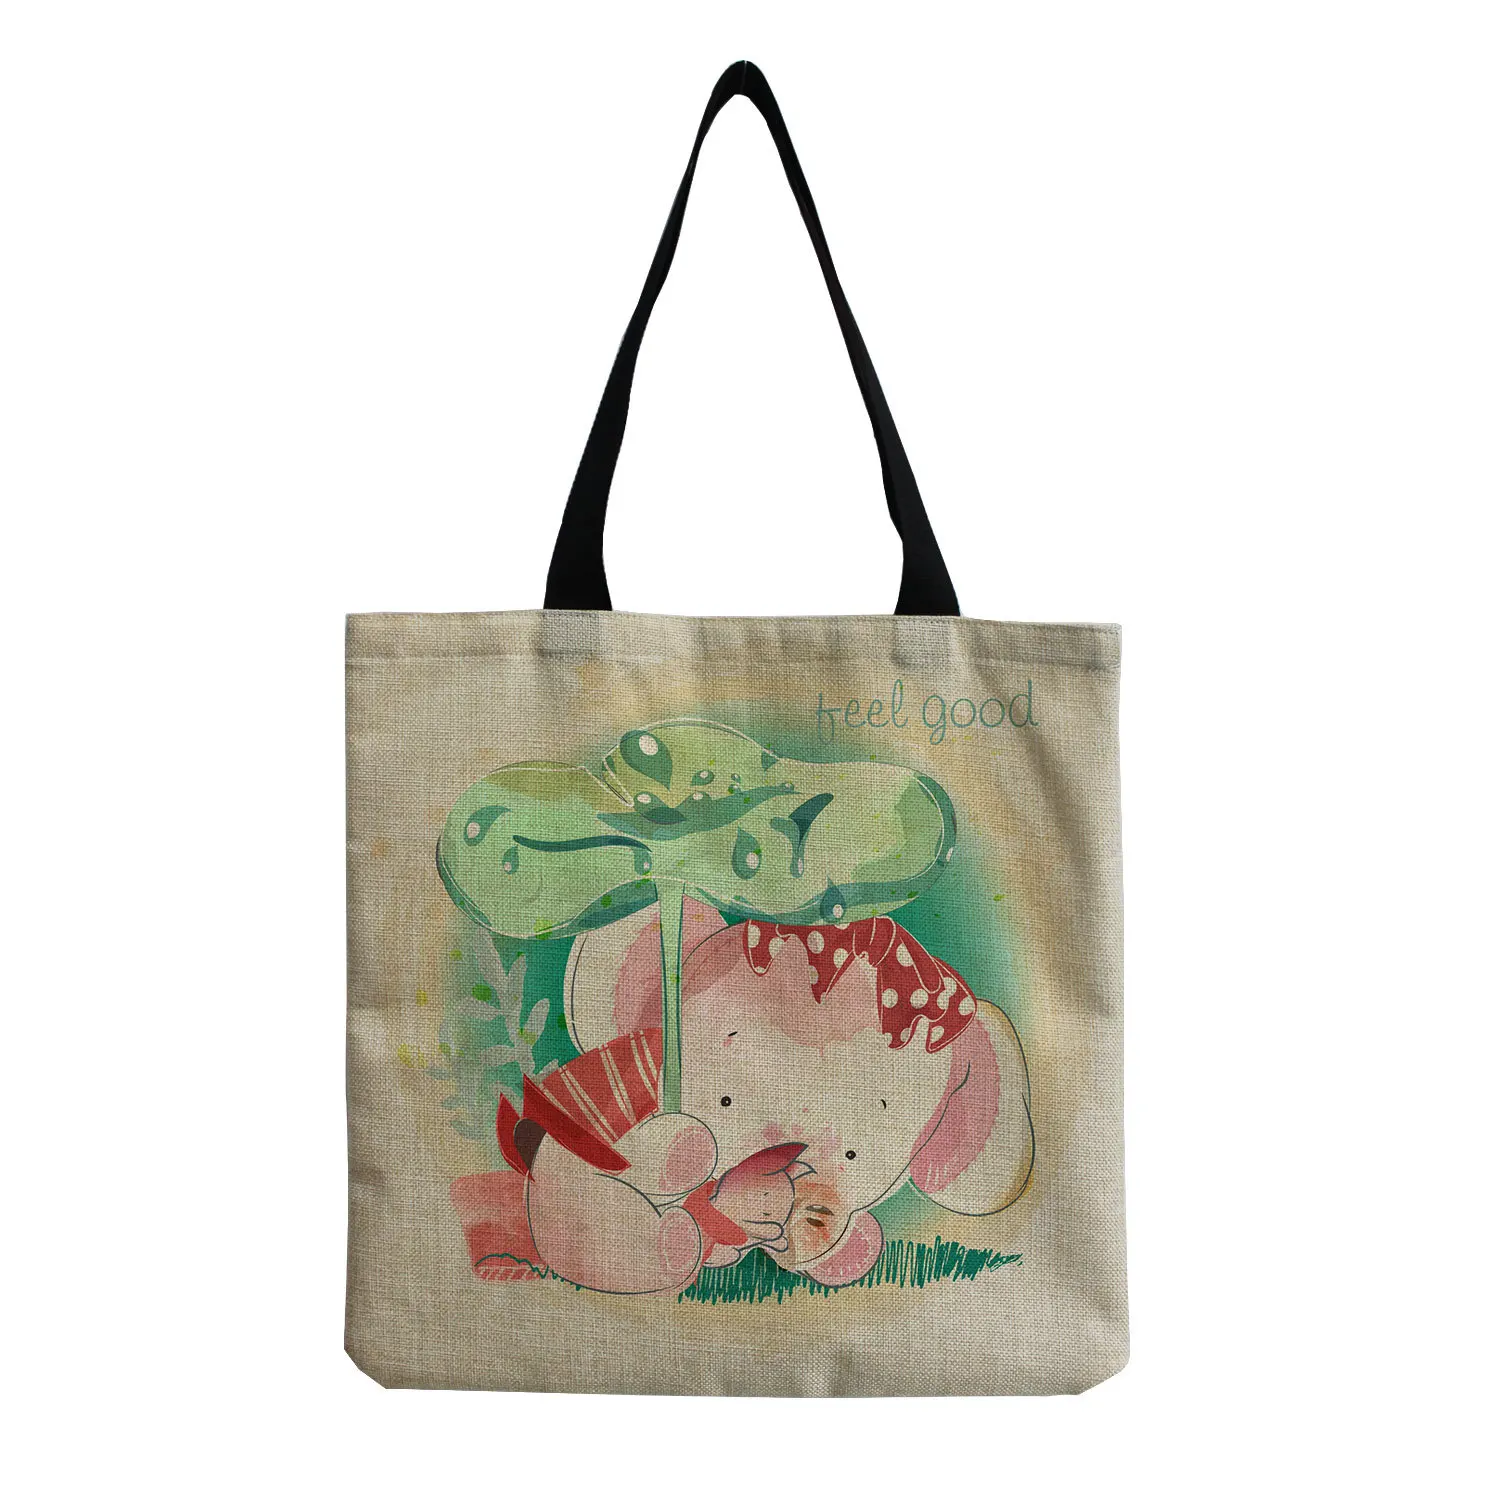 

YUECIMIE Reusable Outdoor Big Beach Shoulder Bag For Female Girl Linen Handbag Cute Elephant Printed Casual Tote Shopping Bag